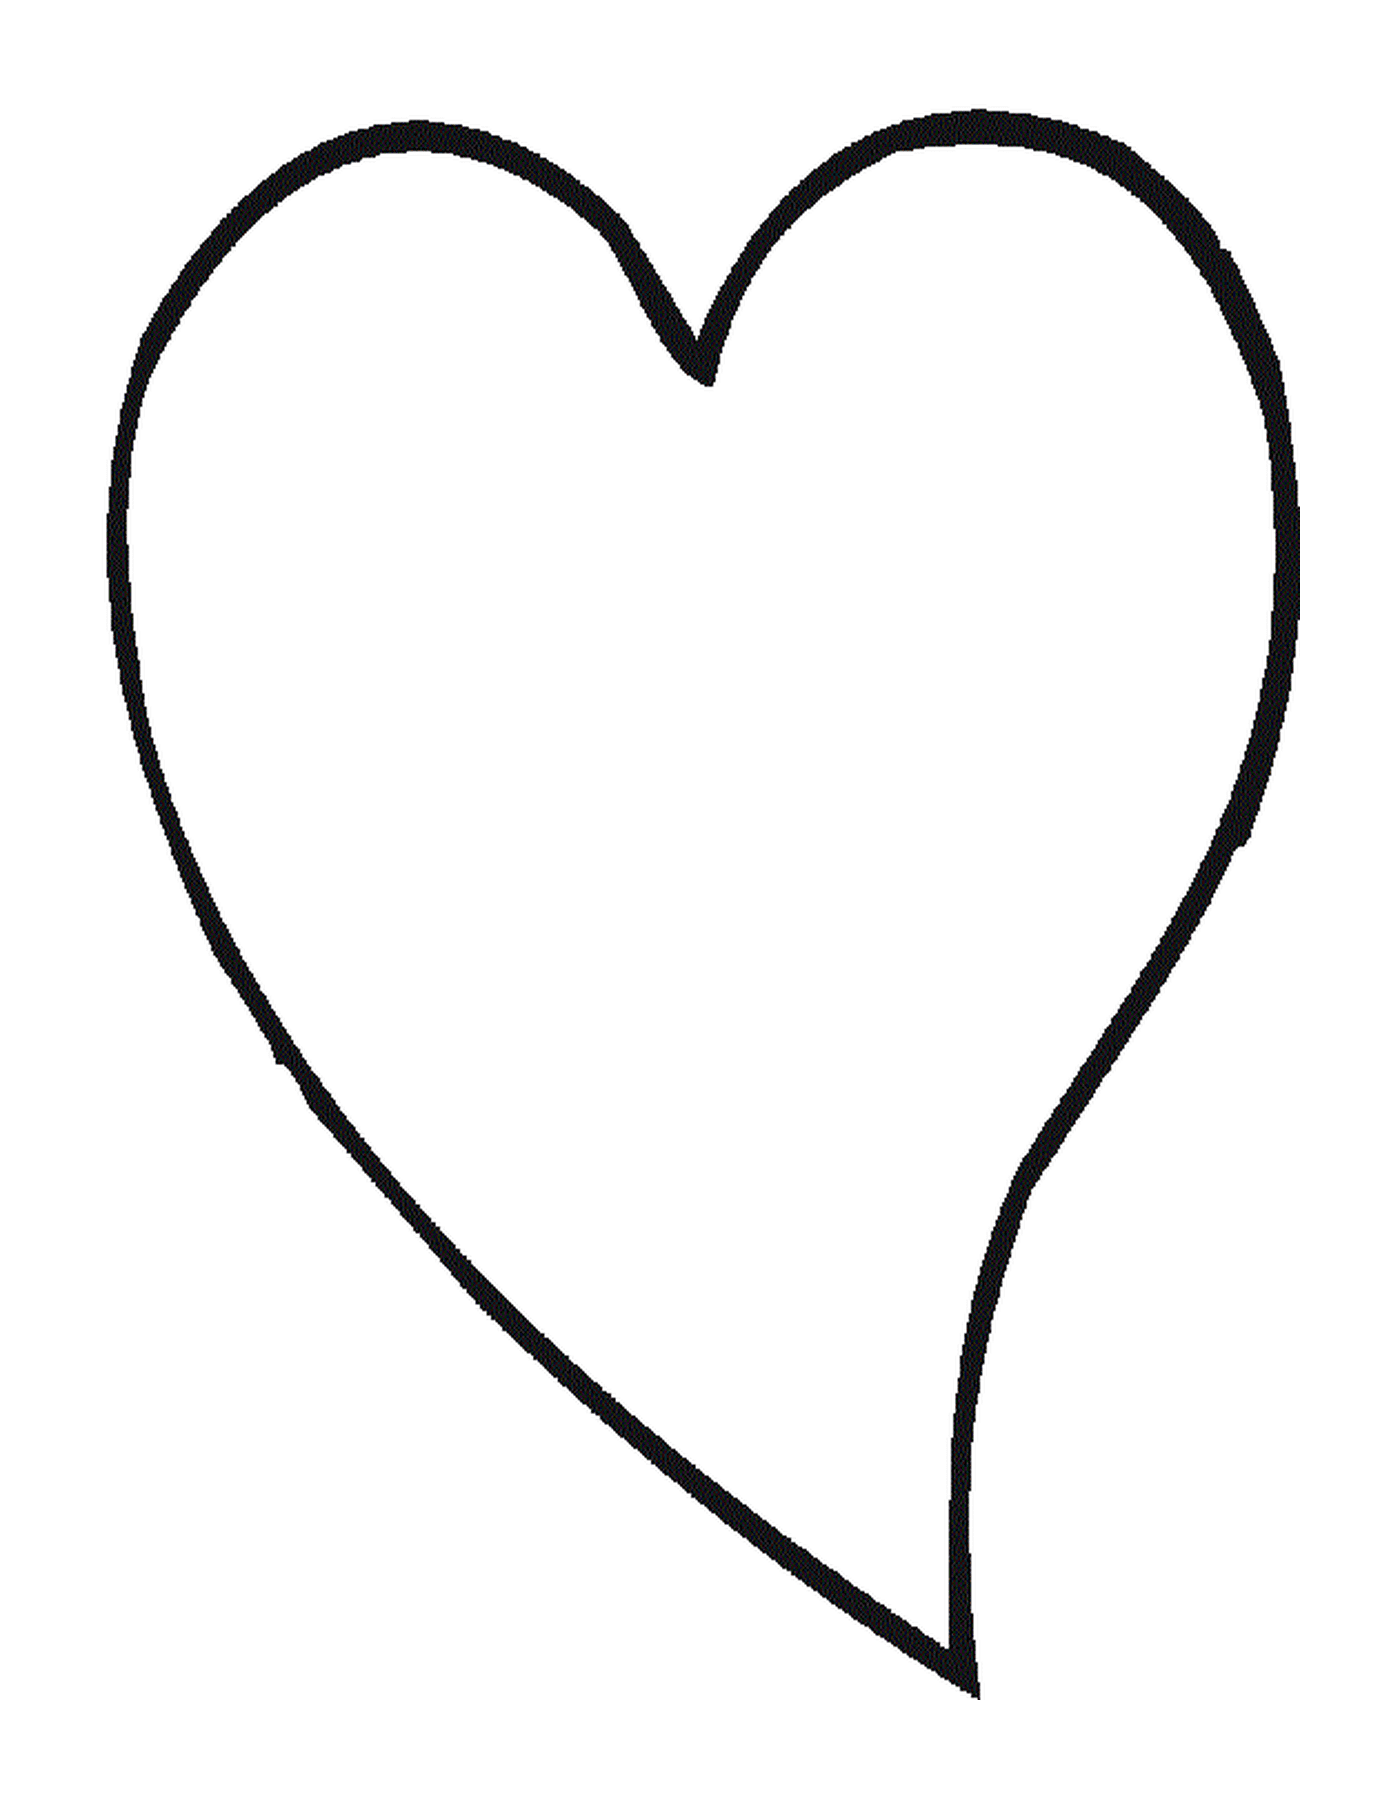  Classic heart to symbolize love 